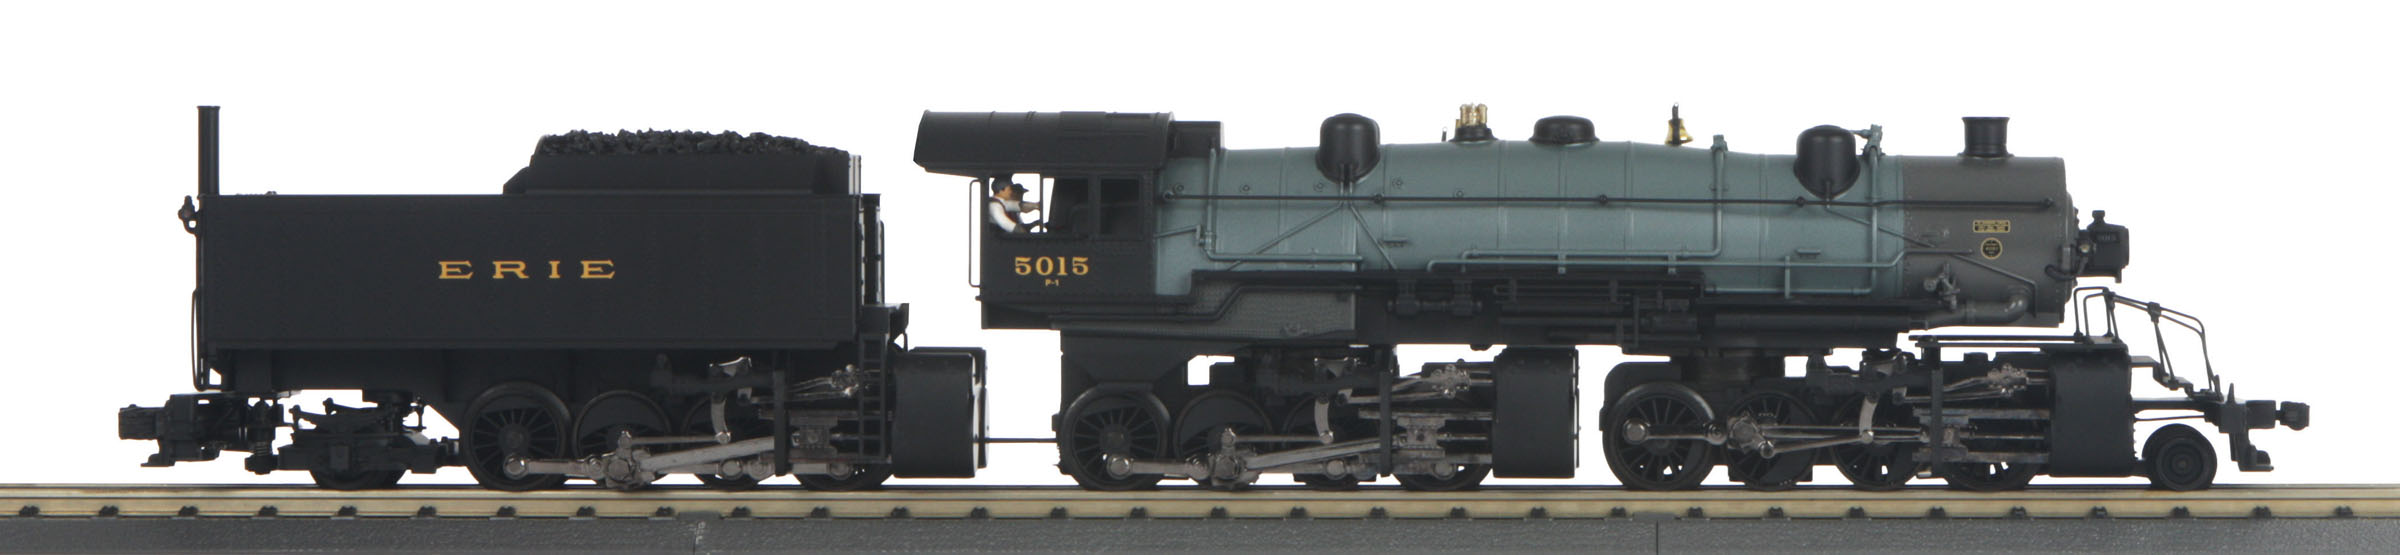 Details about MTH 30-1645-1 2-8-8-8-2 Imperial Triplex Steam Engine w 